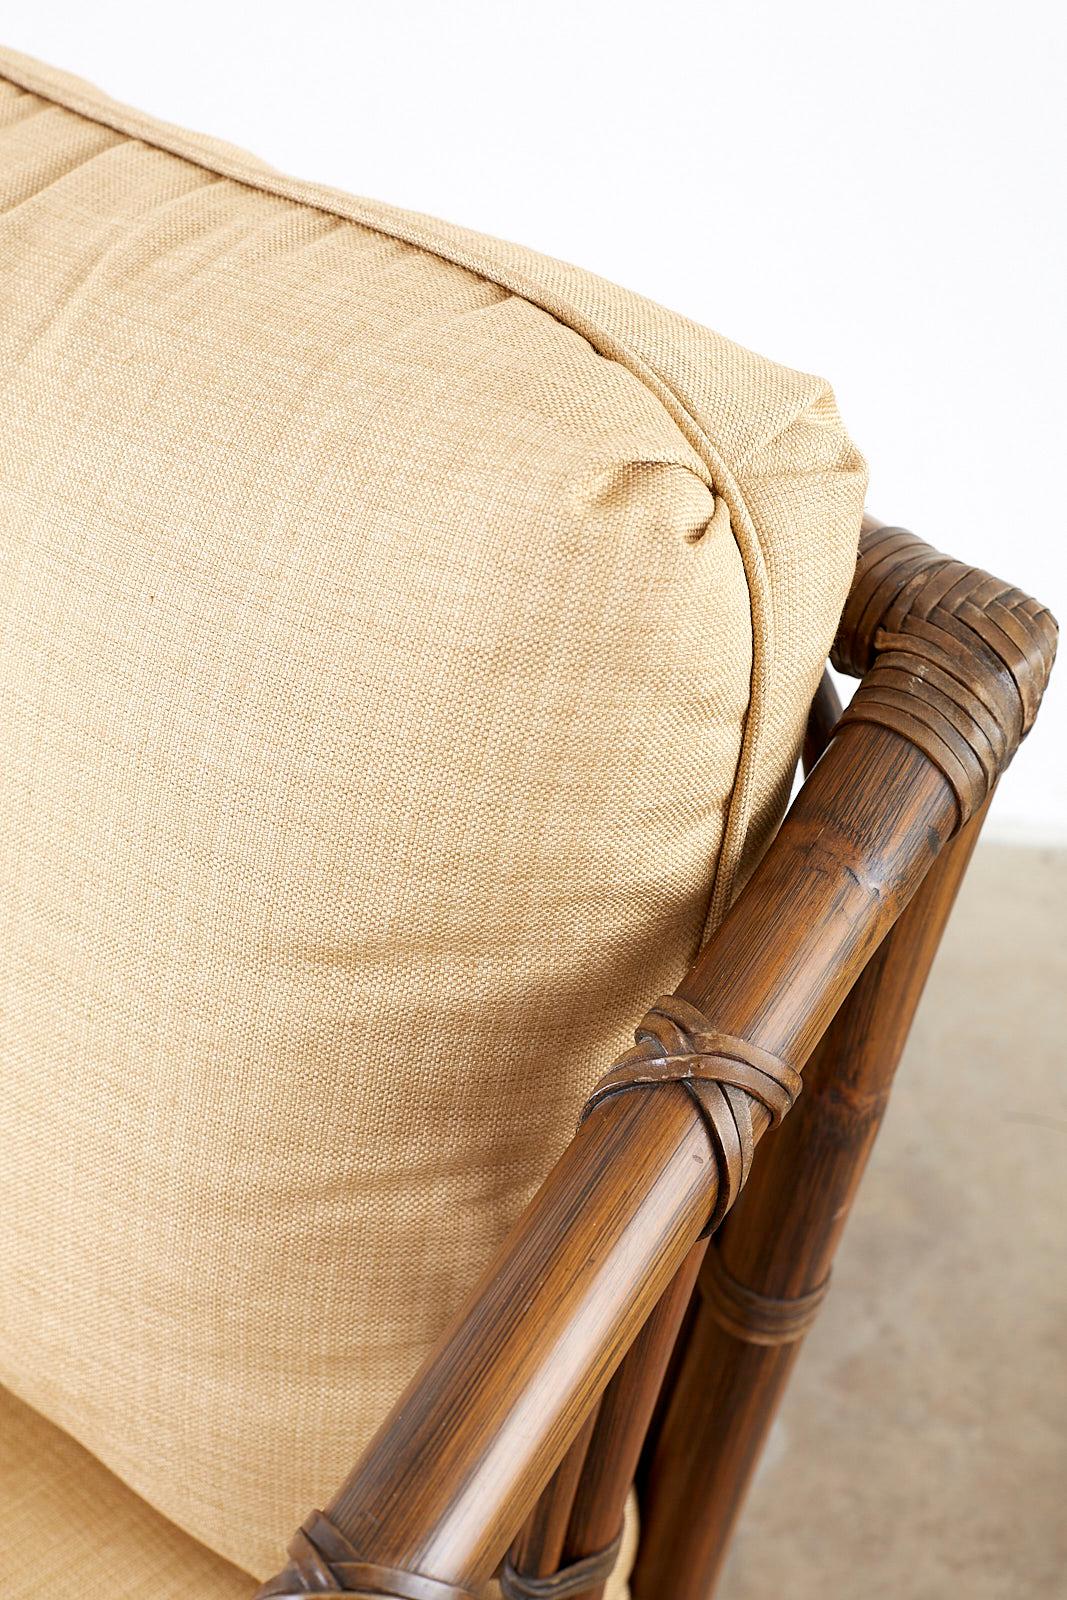 McGuire Organic Modern Bamboo Rattan Lounge Chair In Good Condition In Rio Vista, CA